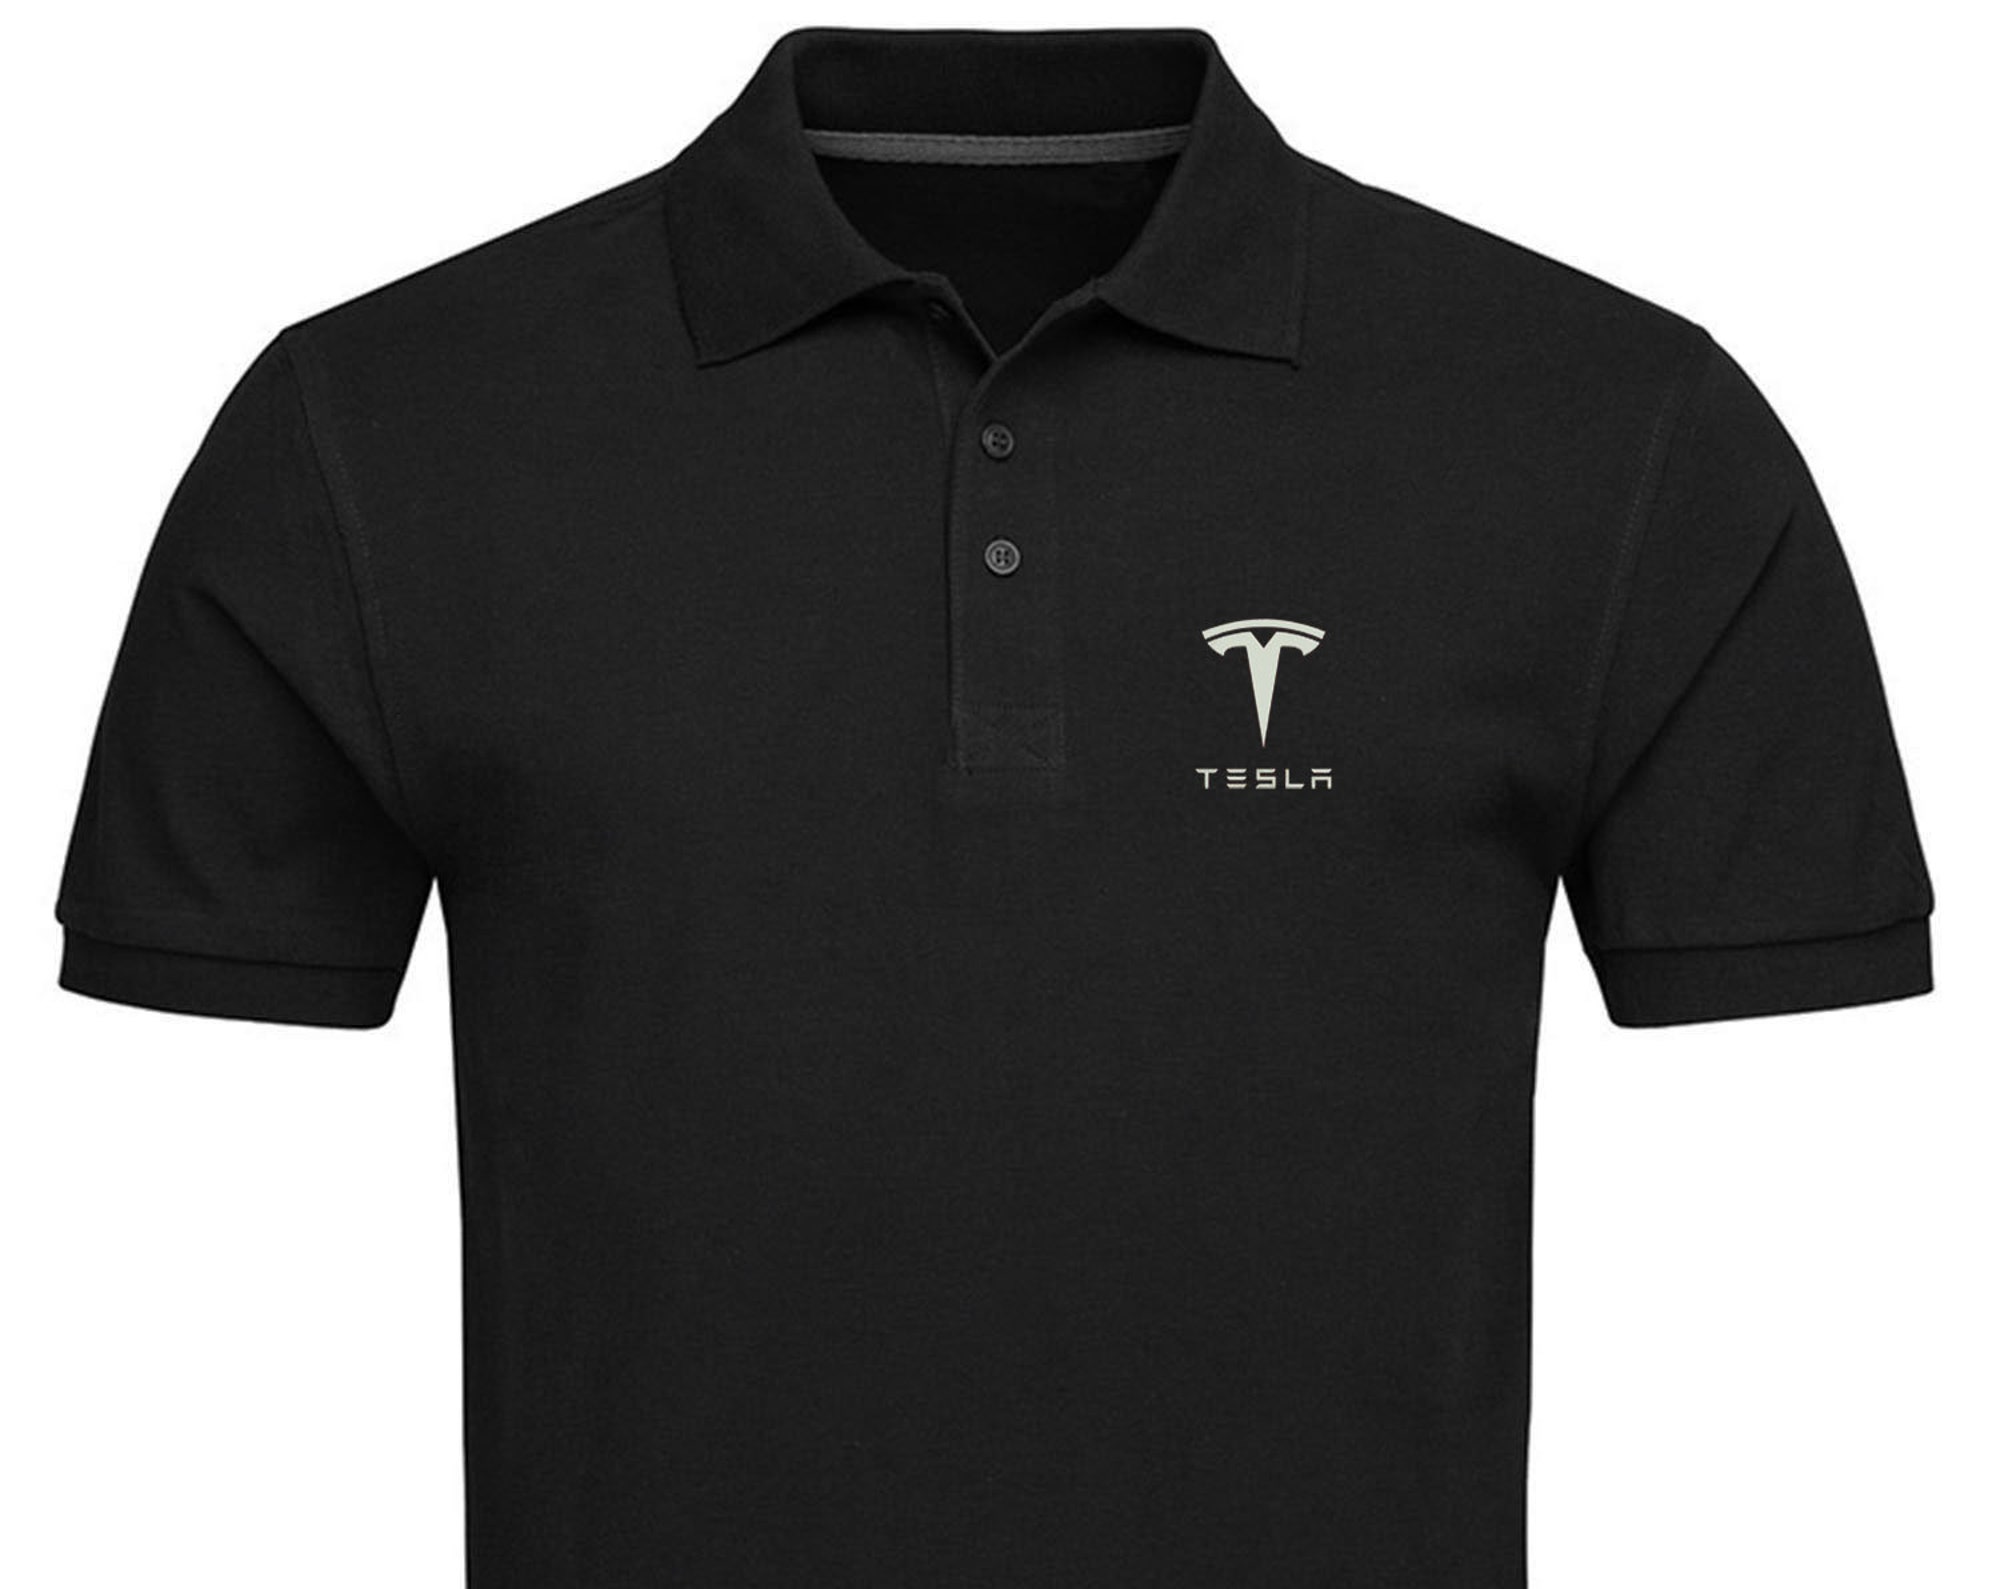 Tesla Motor Auto Car Man's Polo Shirt Embroidered Design Top Ring Spoon Cotton Short Sleeve